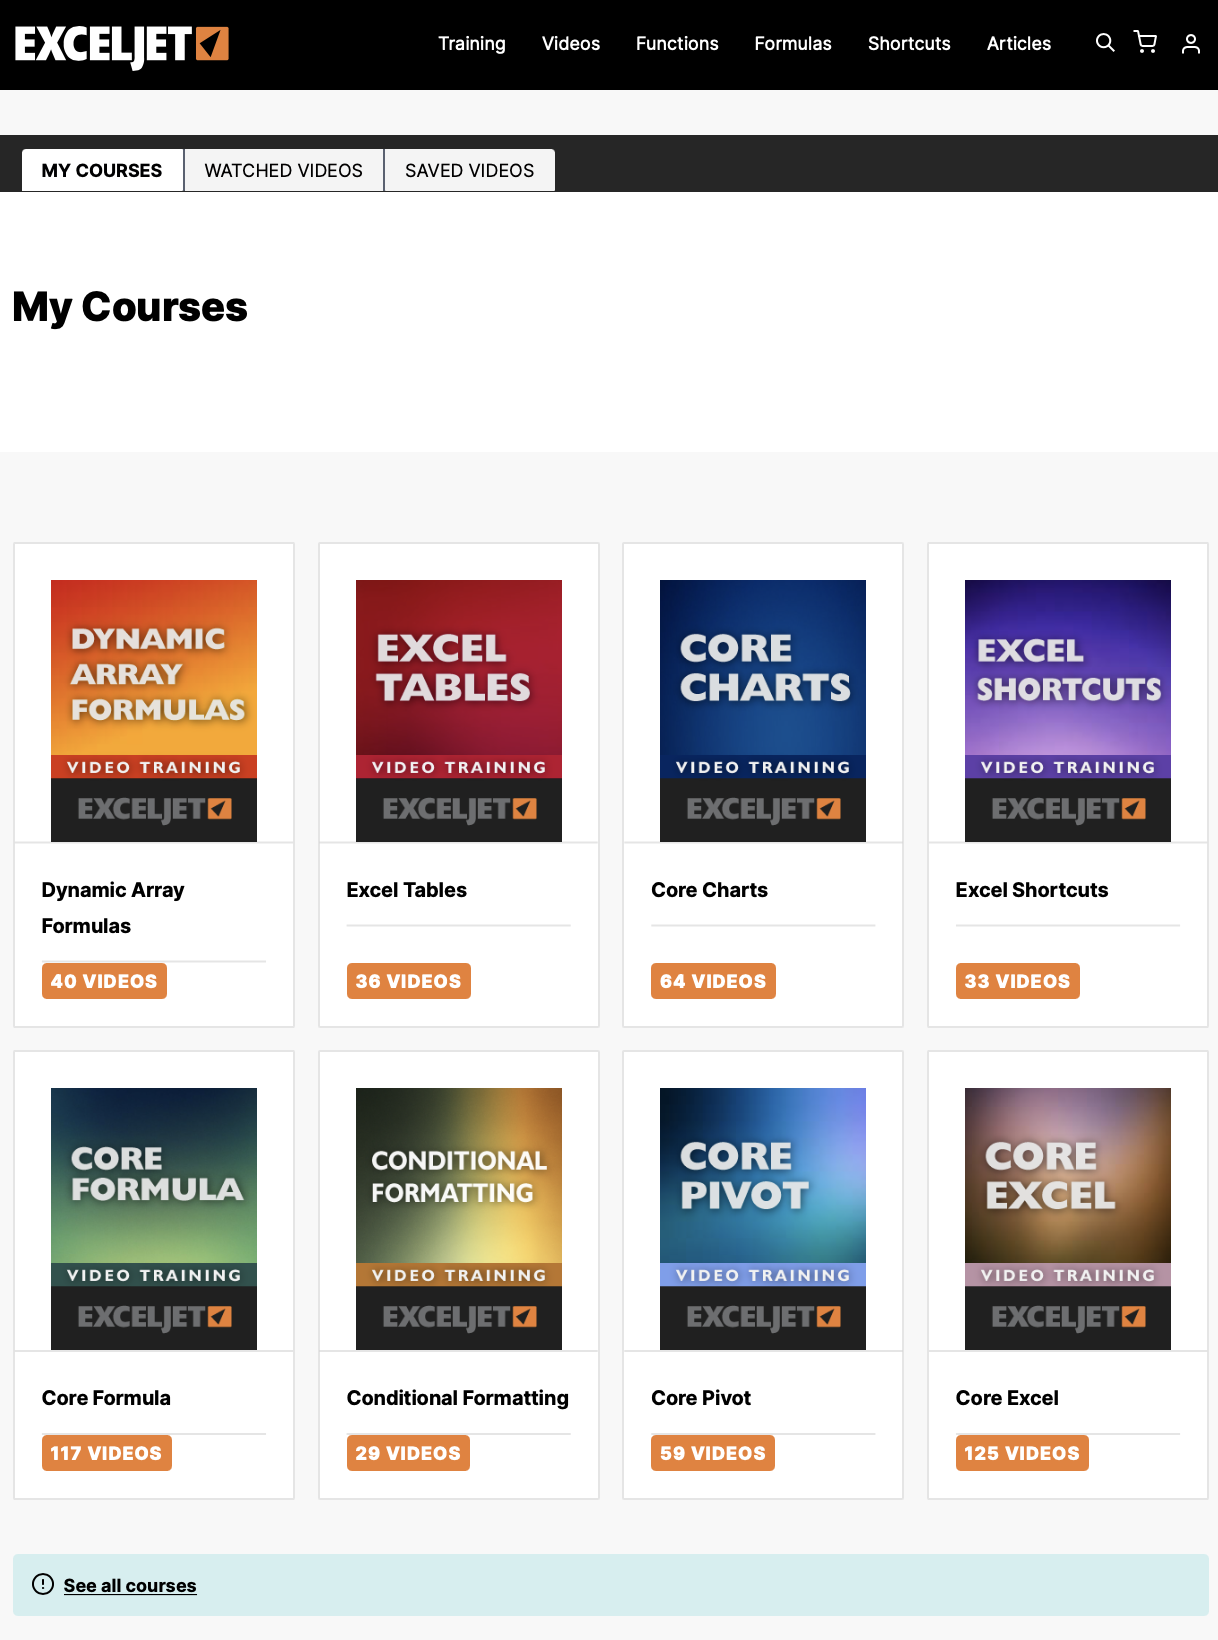 My Courses